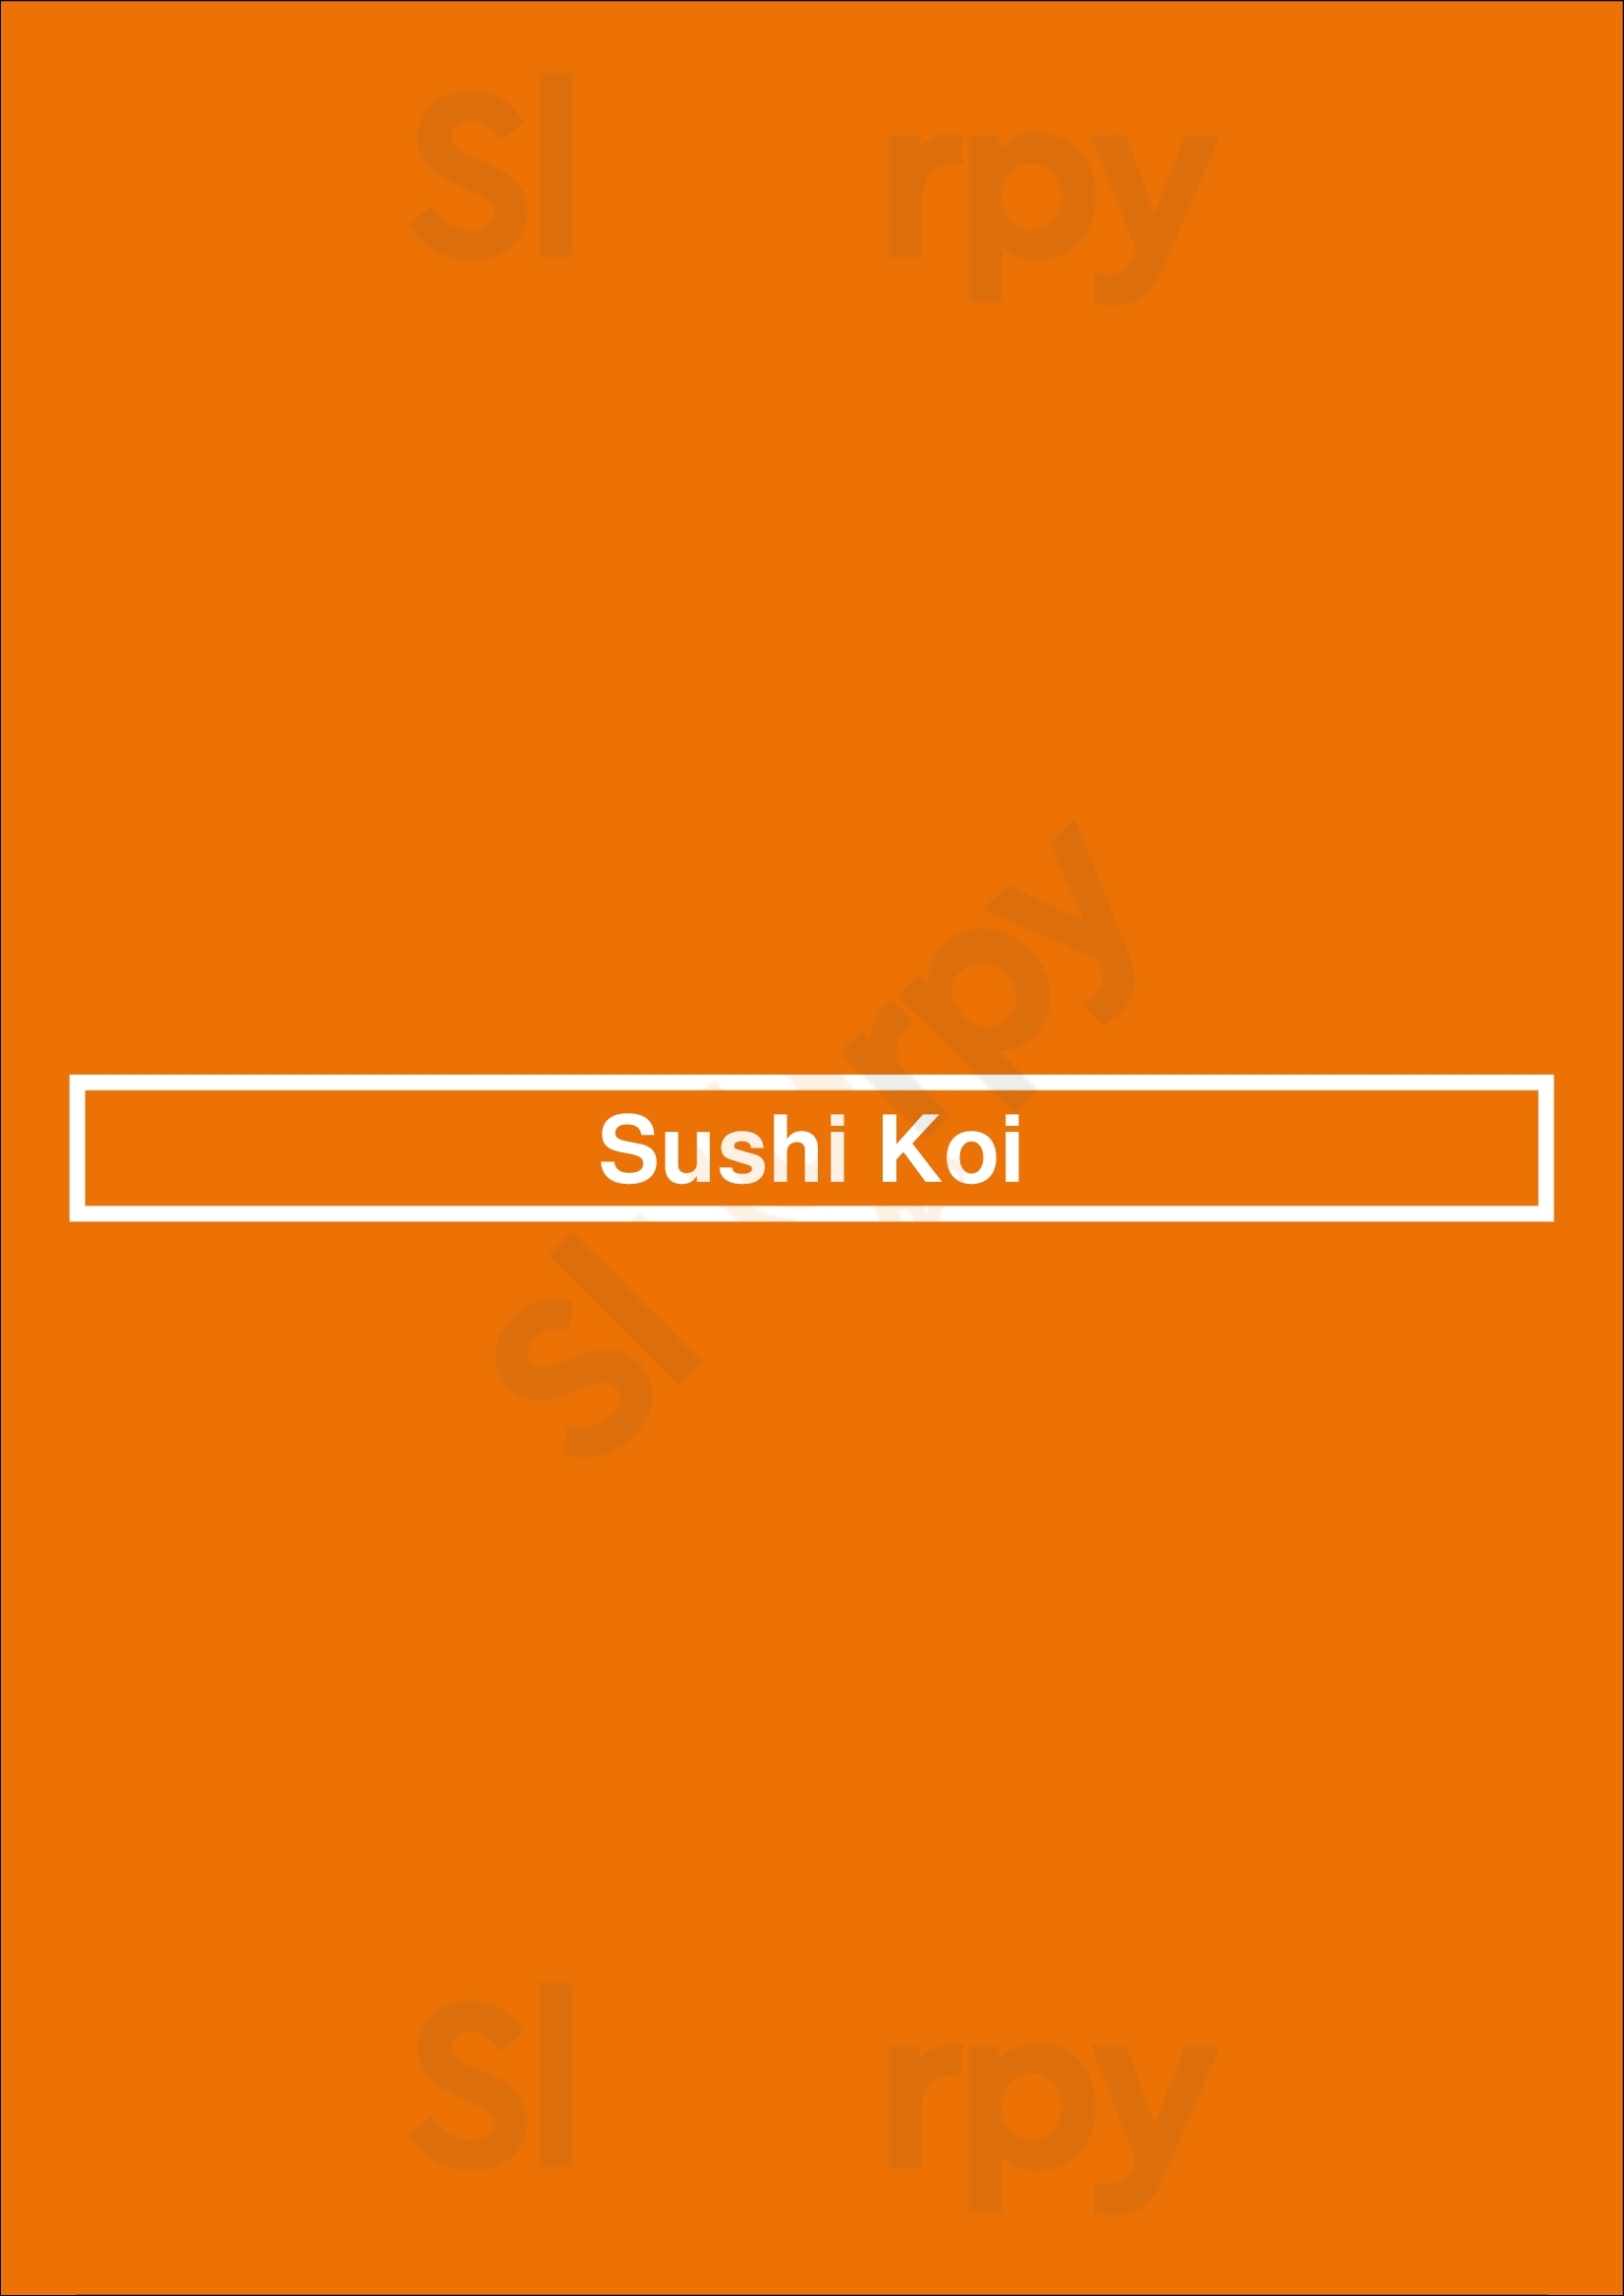 Sushi Koi Houston Menu - 1